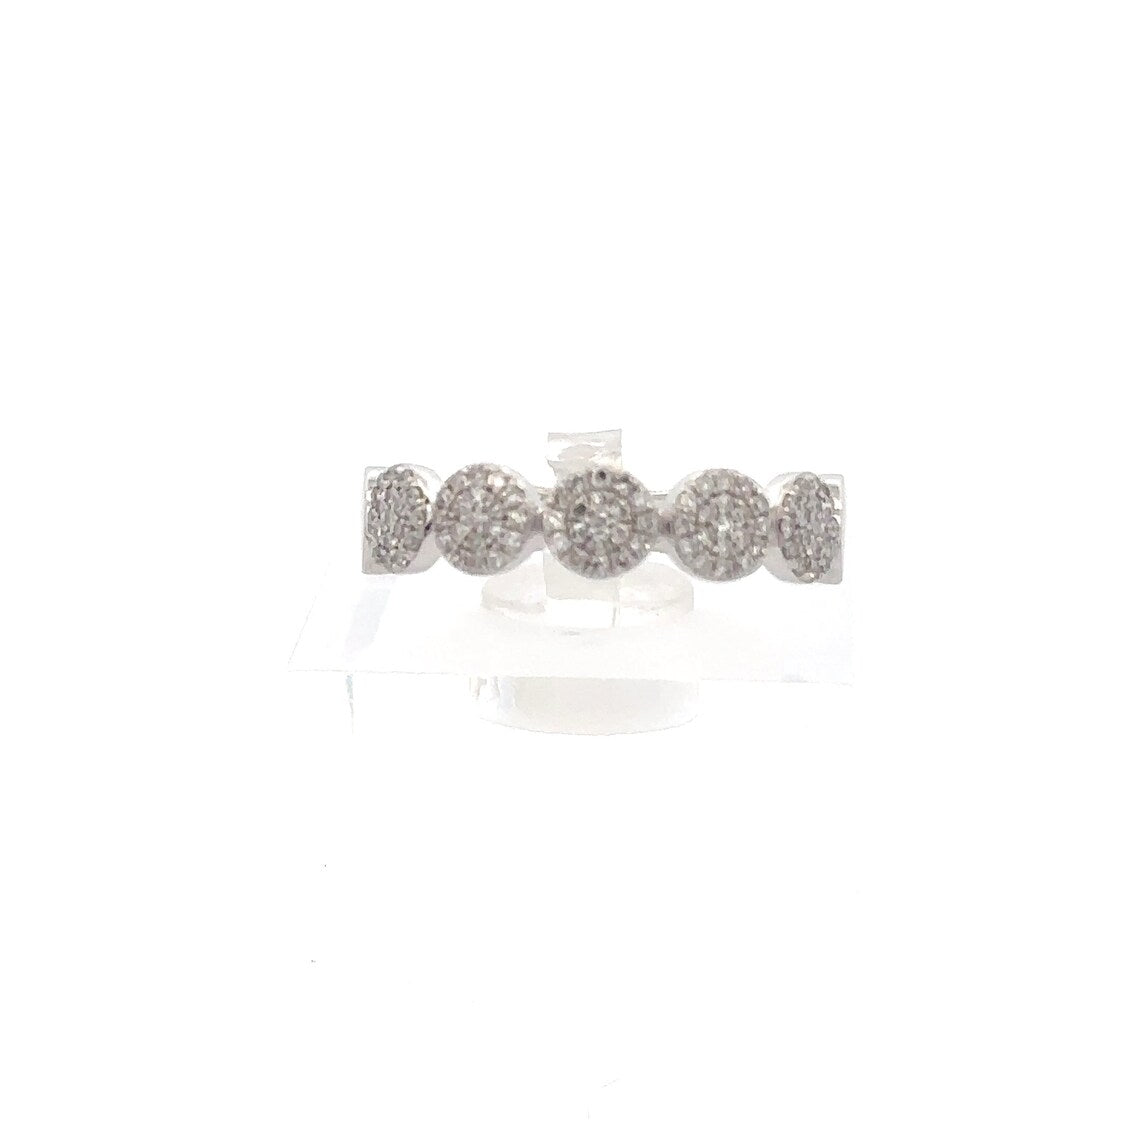 Vintage-Inspired 14K White Gold Halo Ring